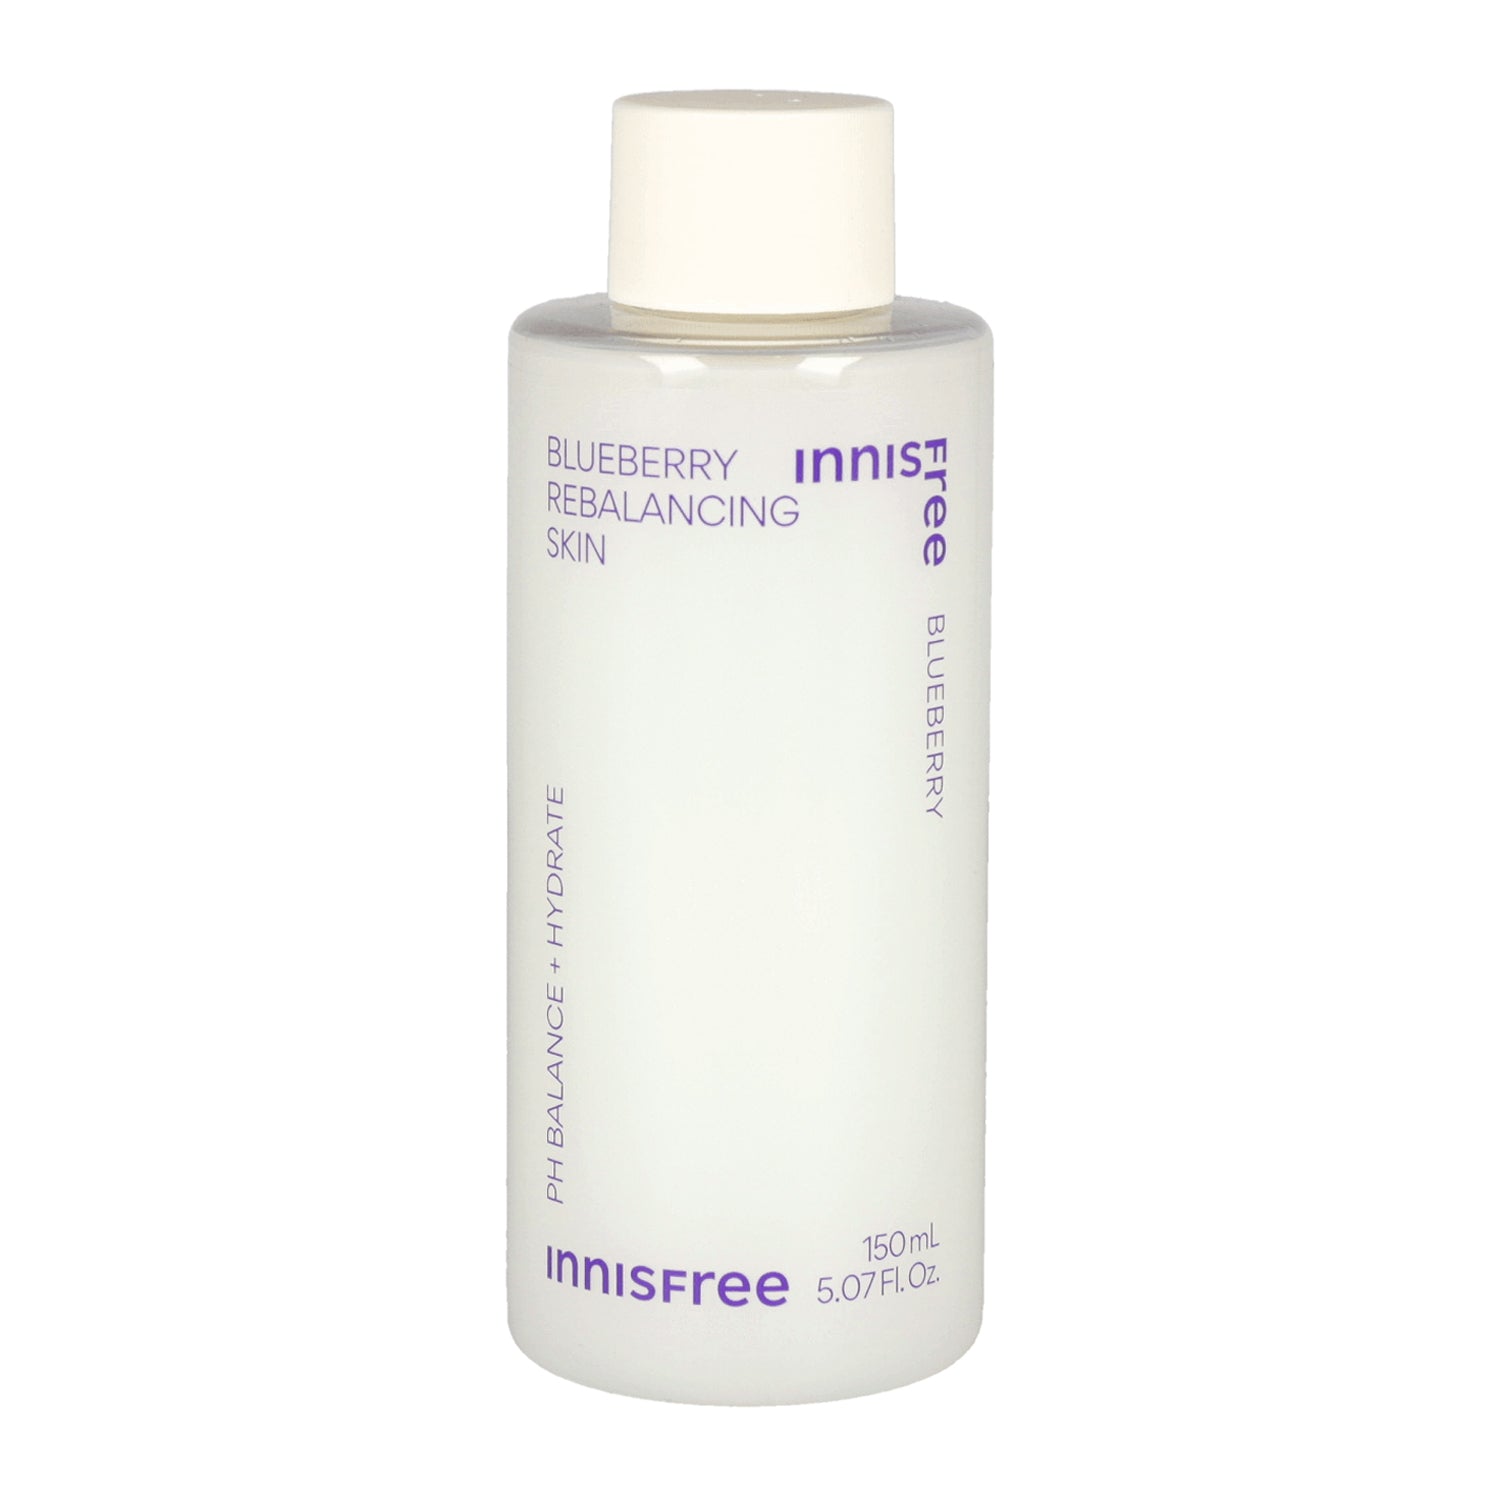 Innisfree Blueberry Rebalancing Skin 150 ml / lotion 130 ml